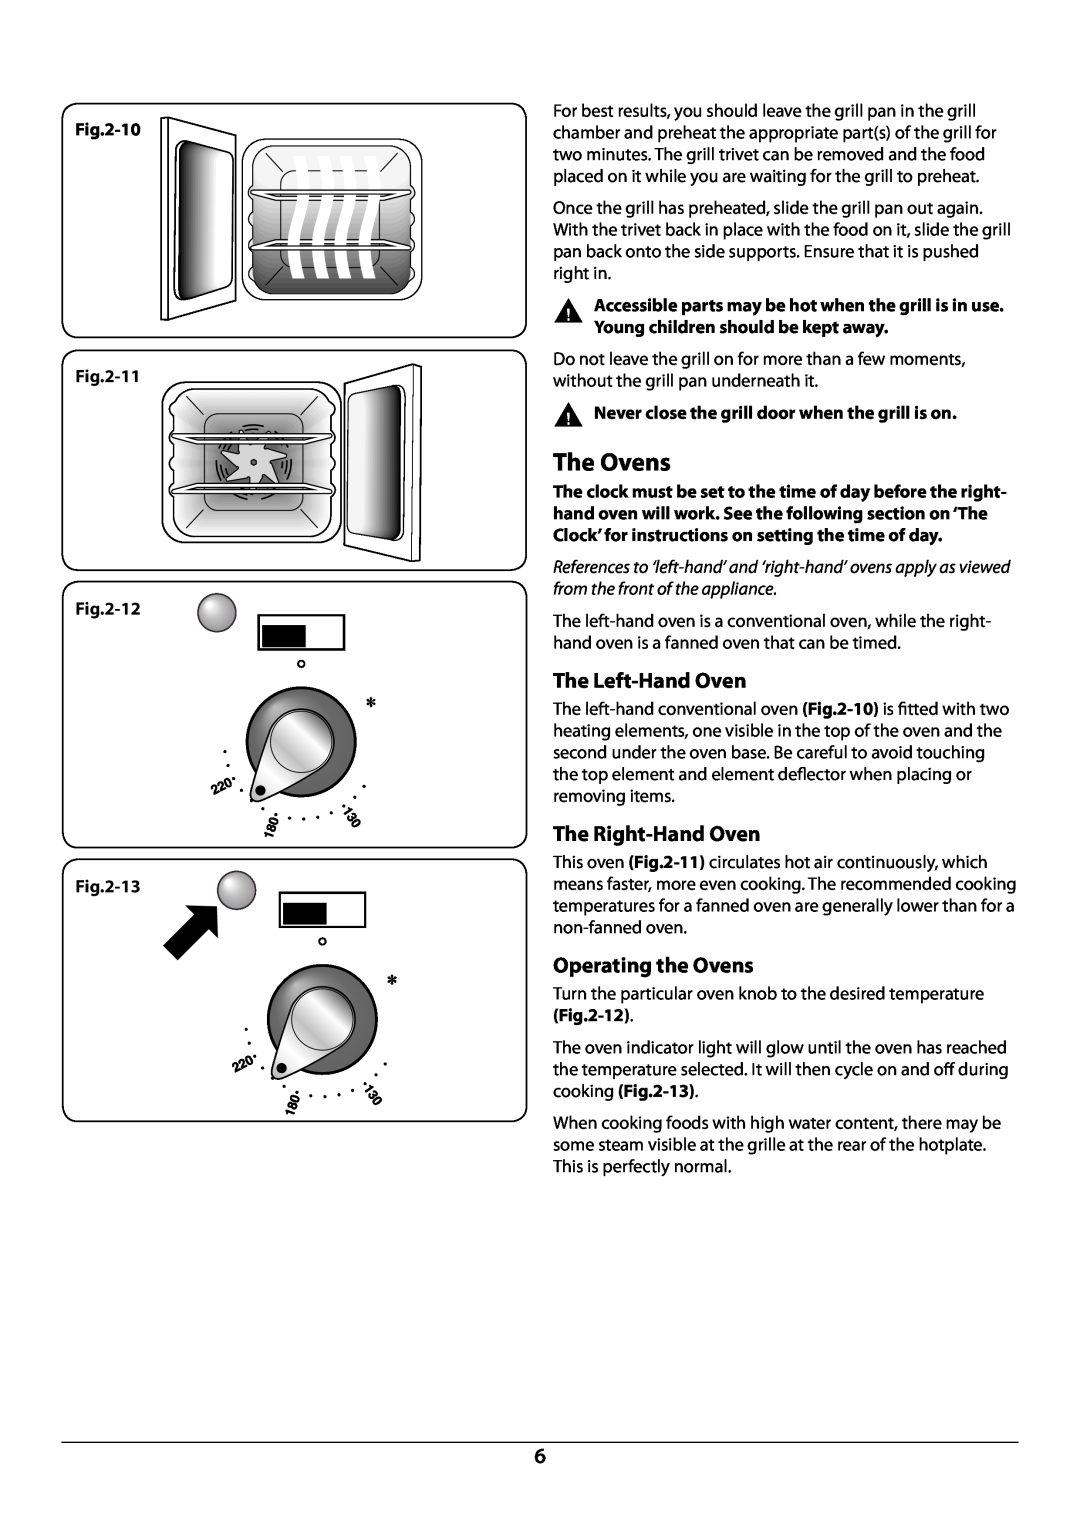 Rangemaster U109948 - 04 manual The Ovens, The Left-Hand Oven, The Right-Hand Oven, Operating the Ovens 